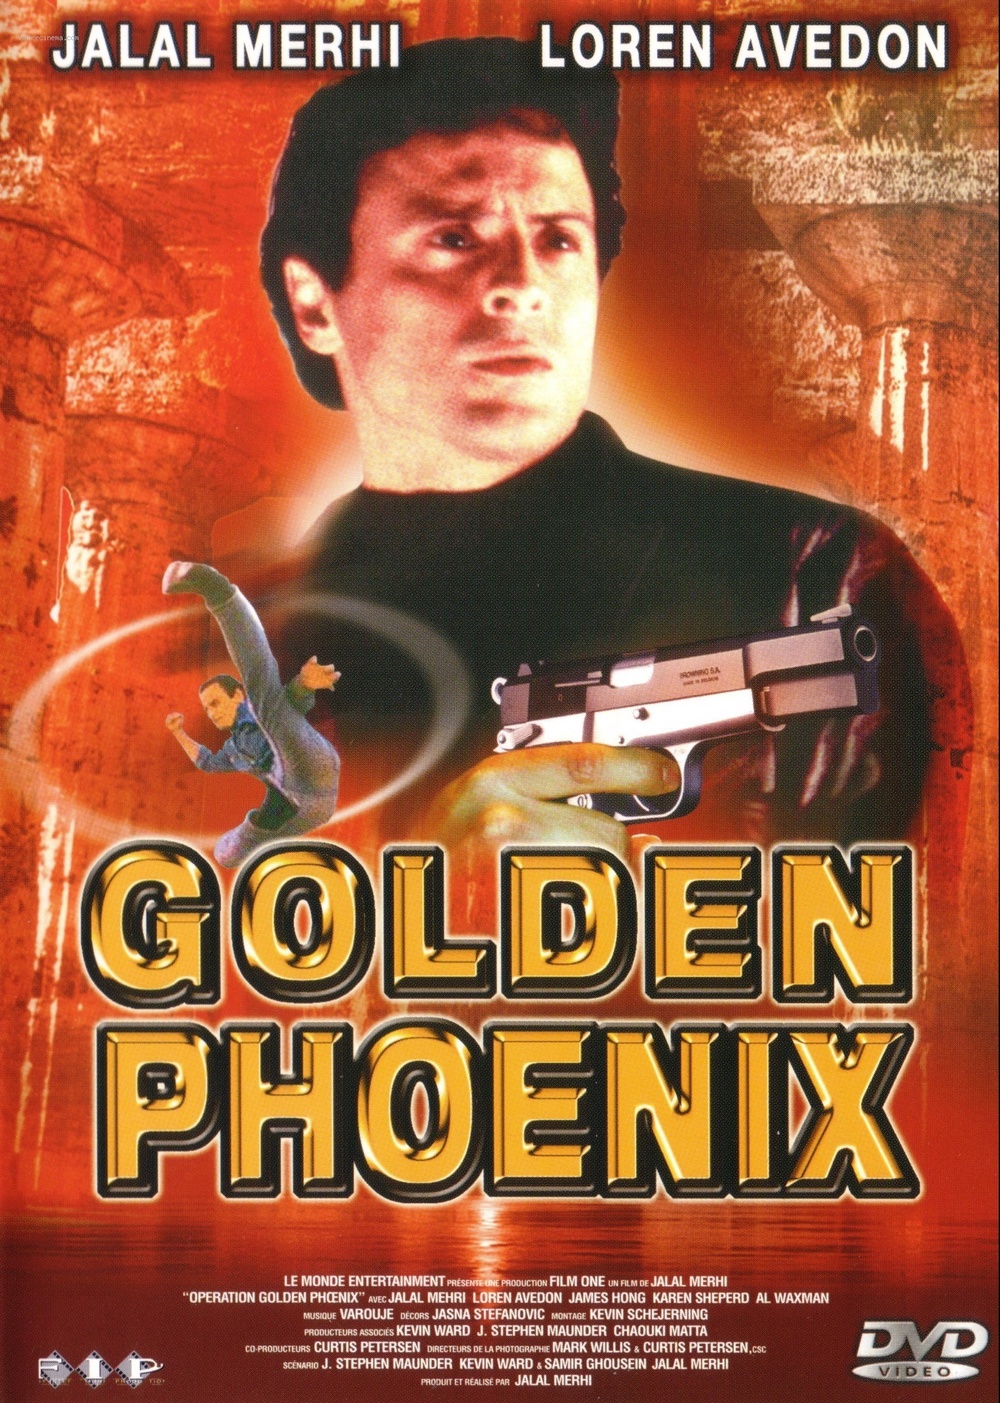 affiche du film Operation Golden Phoenix